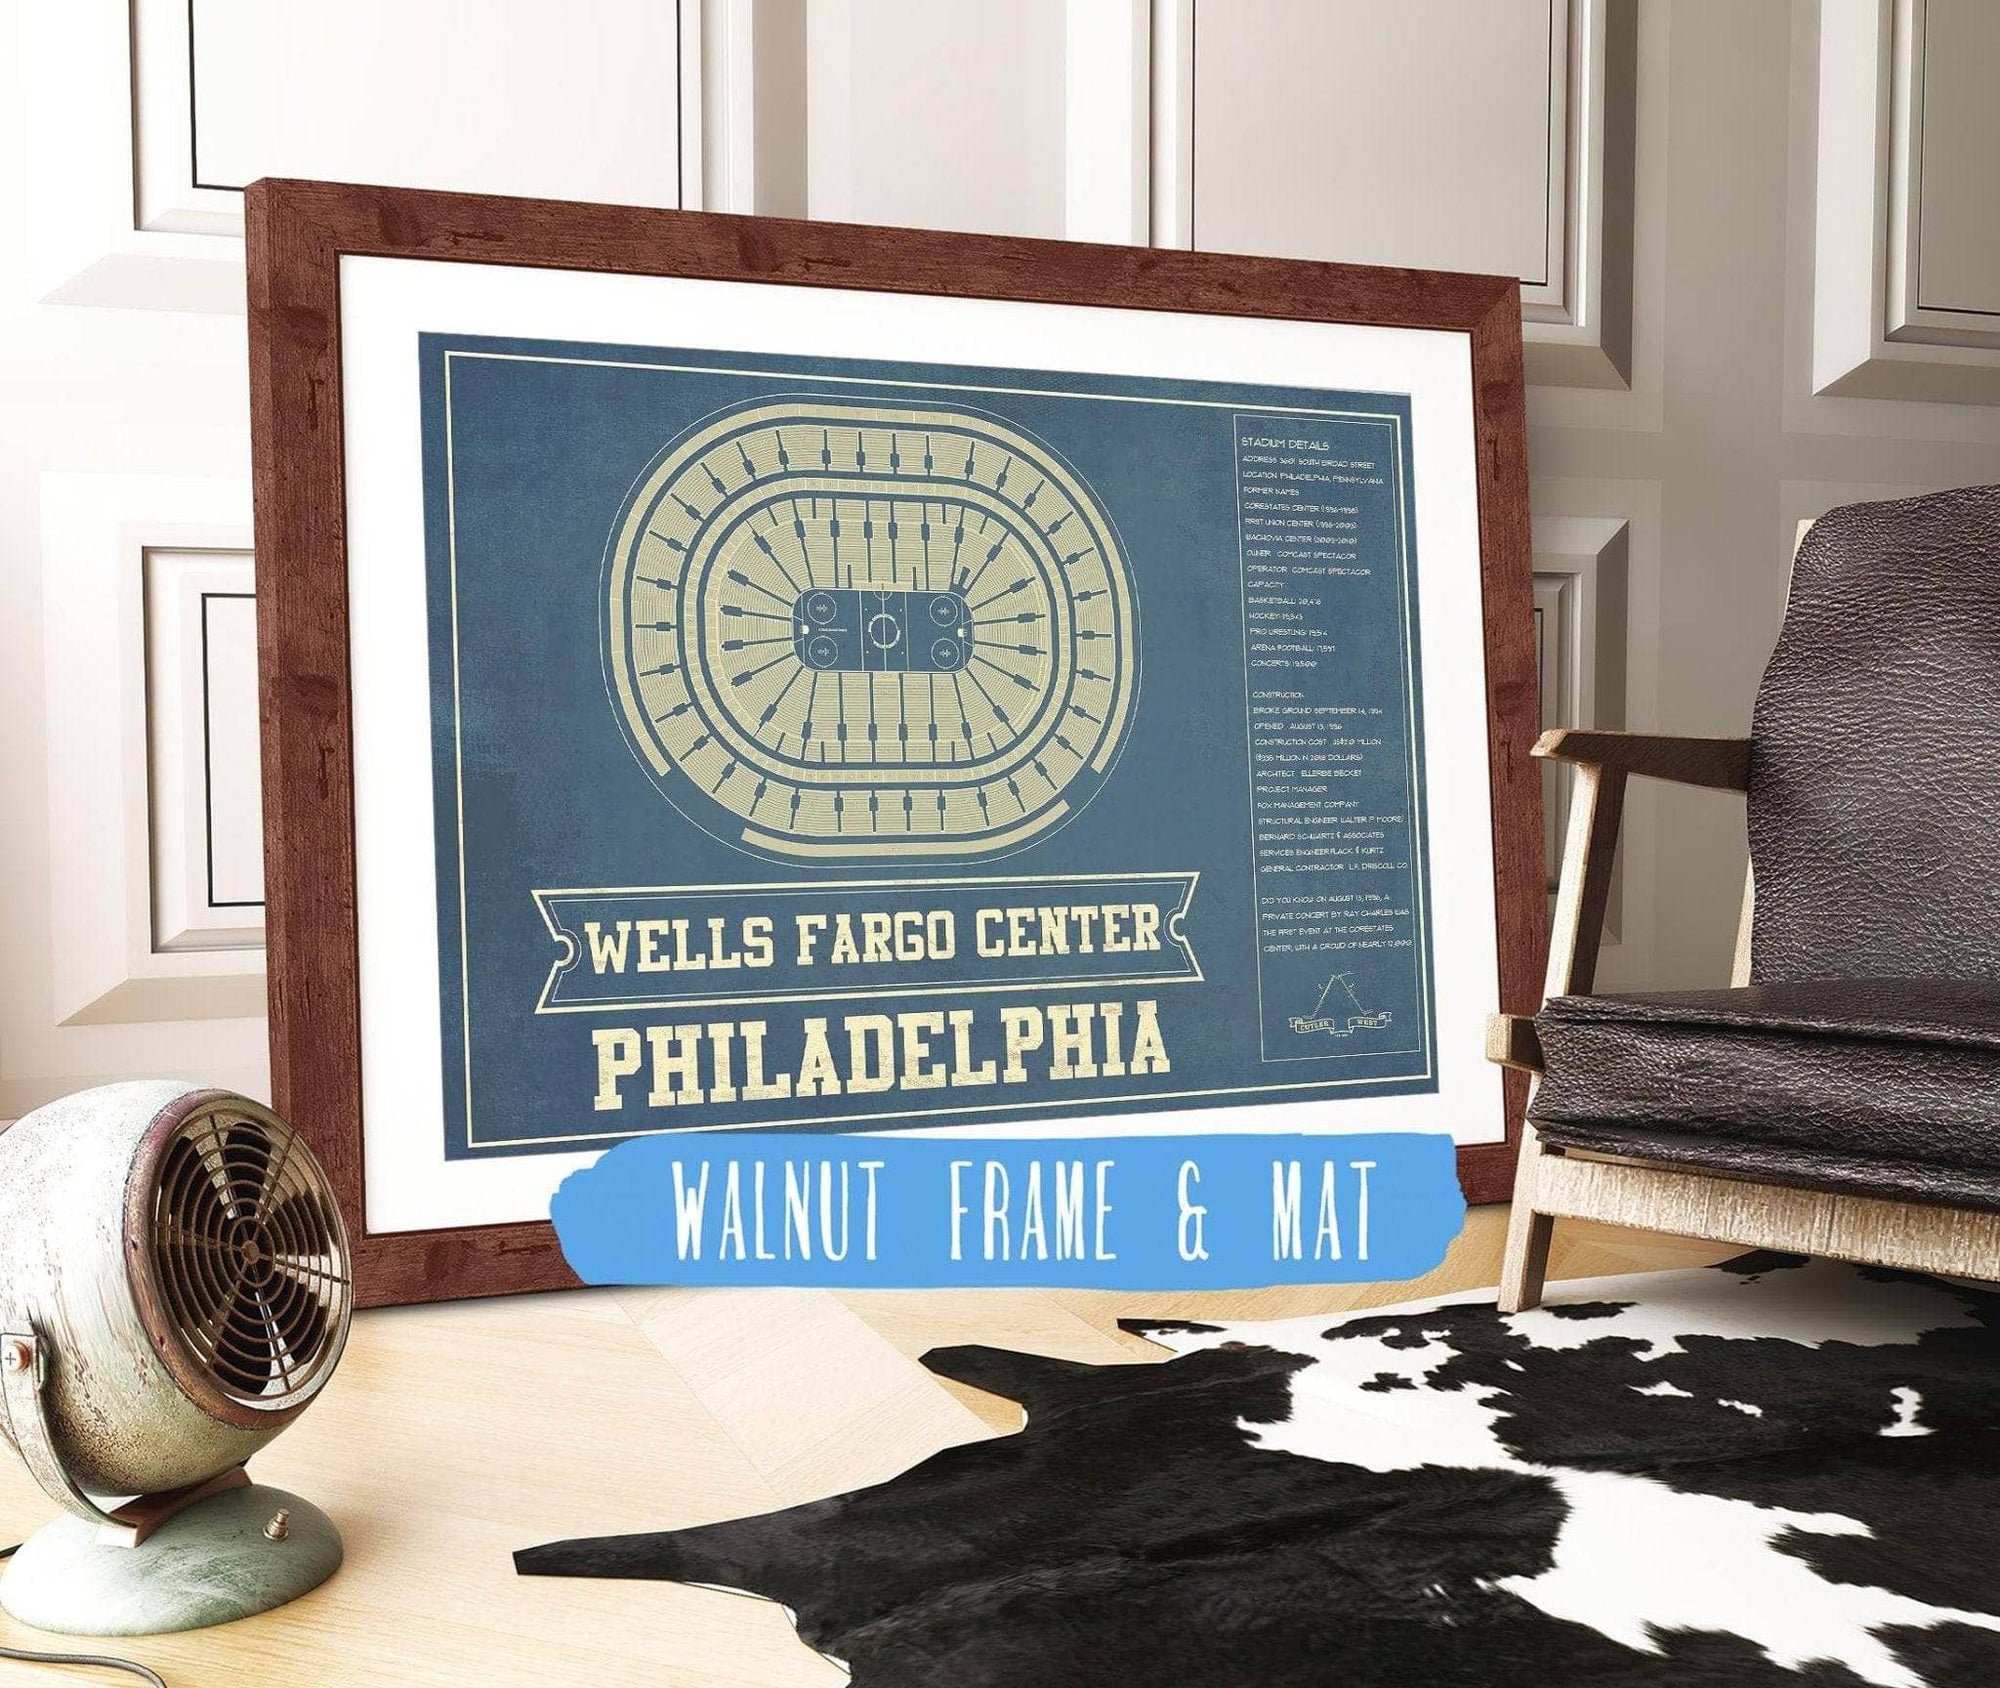 Cutler West 14" x 11" / Walnut Frame & Mat Philadelphia Flyers Wells Fargo Center Philadelphia Seating Chart - Vintage Hockey Team Color Print 673824383_80724